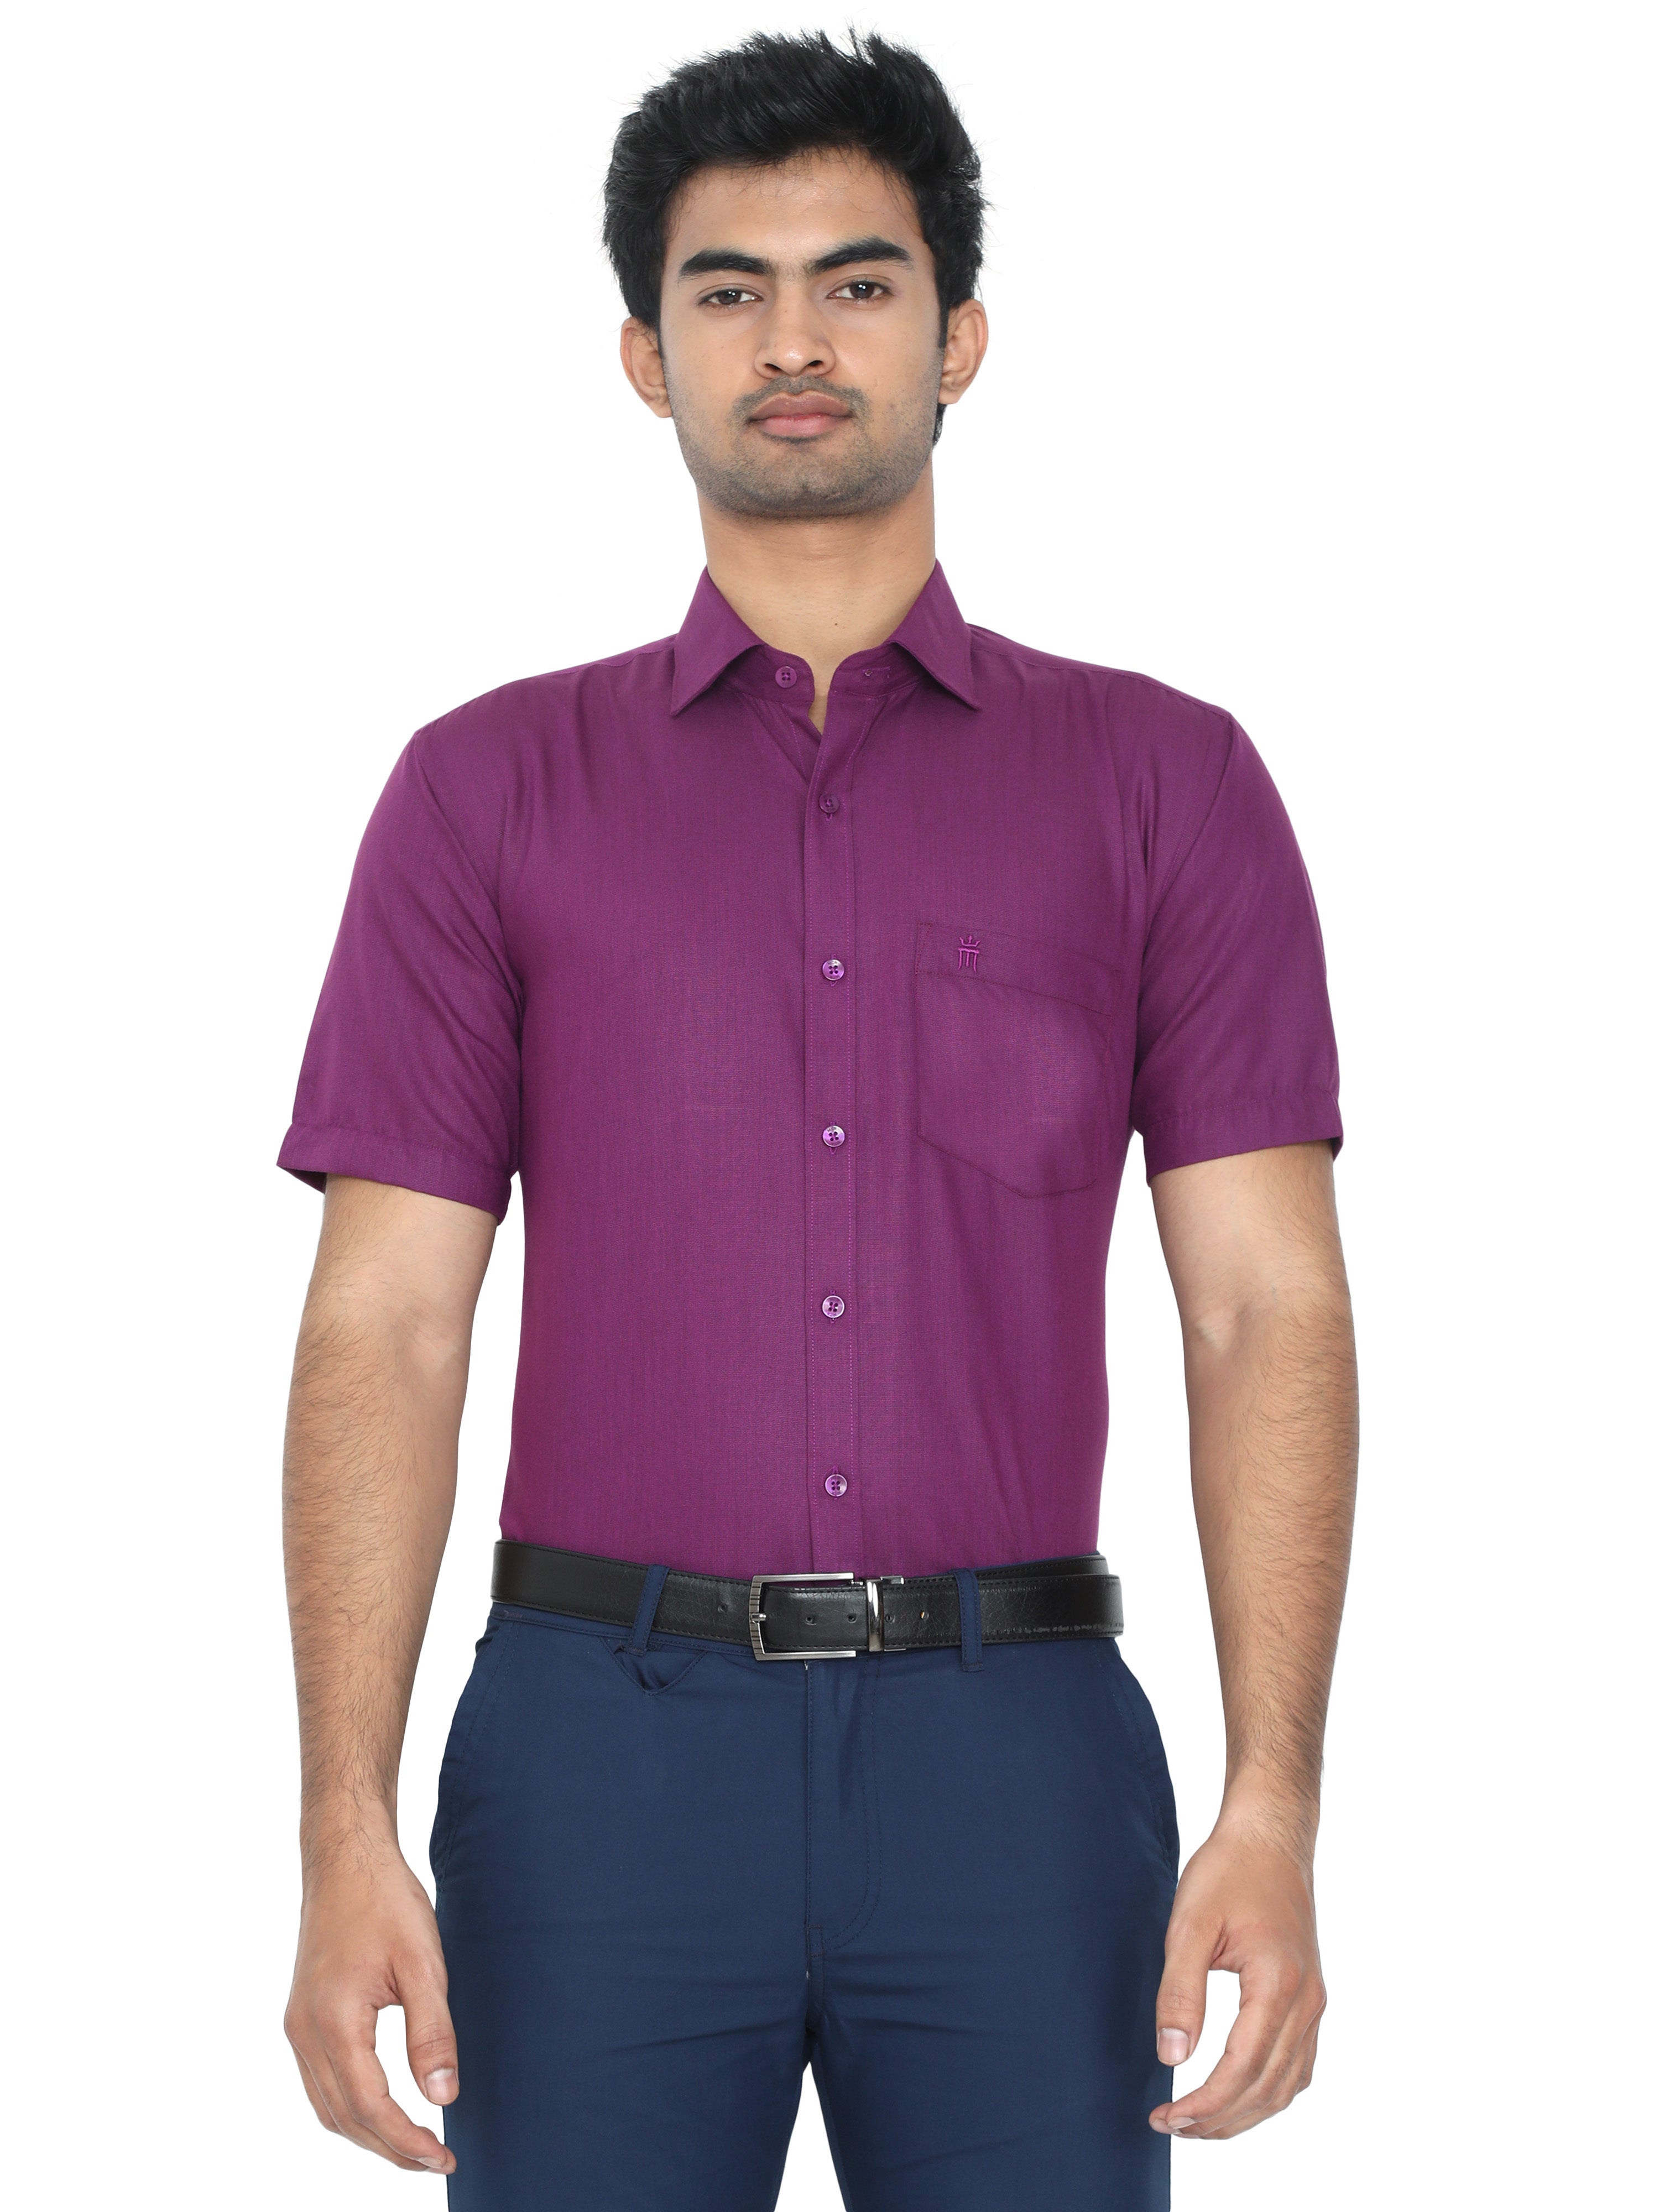 MCR OCEANIC Half Sleeve Formal Color Shirt For Men